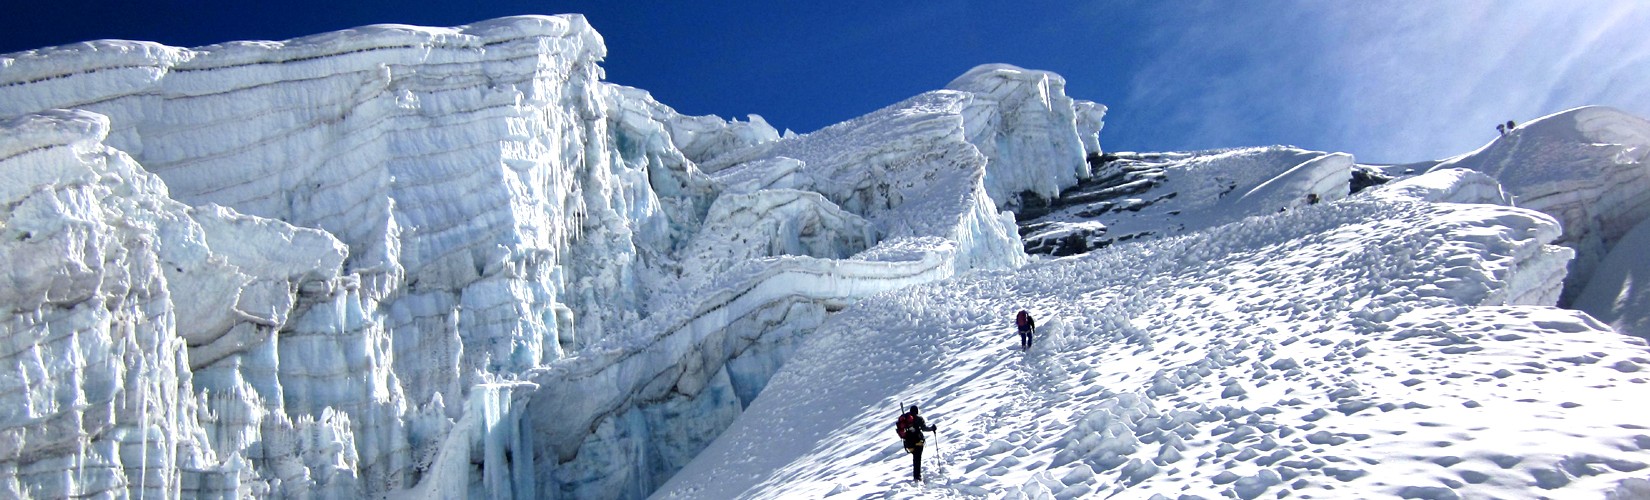 Mera Peak Trek And Climbing | Reasonable Treks And Tour 